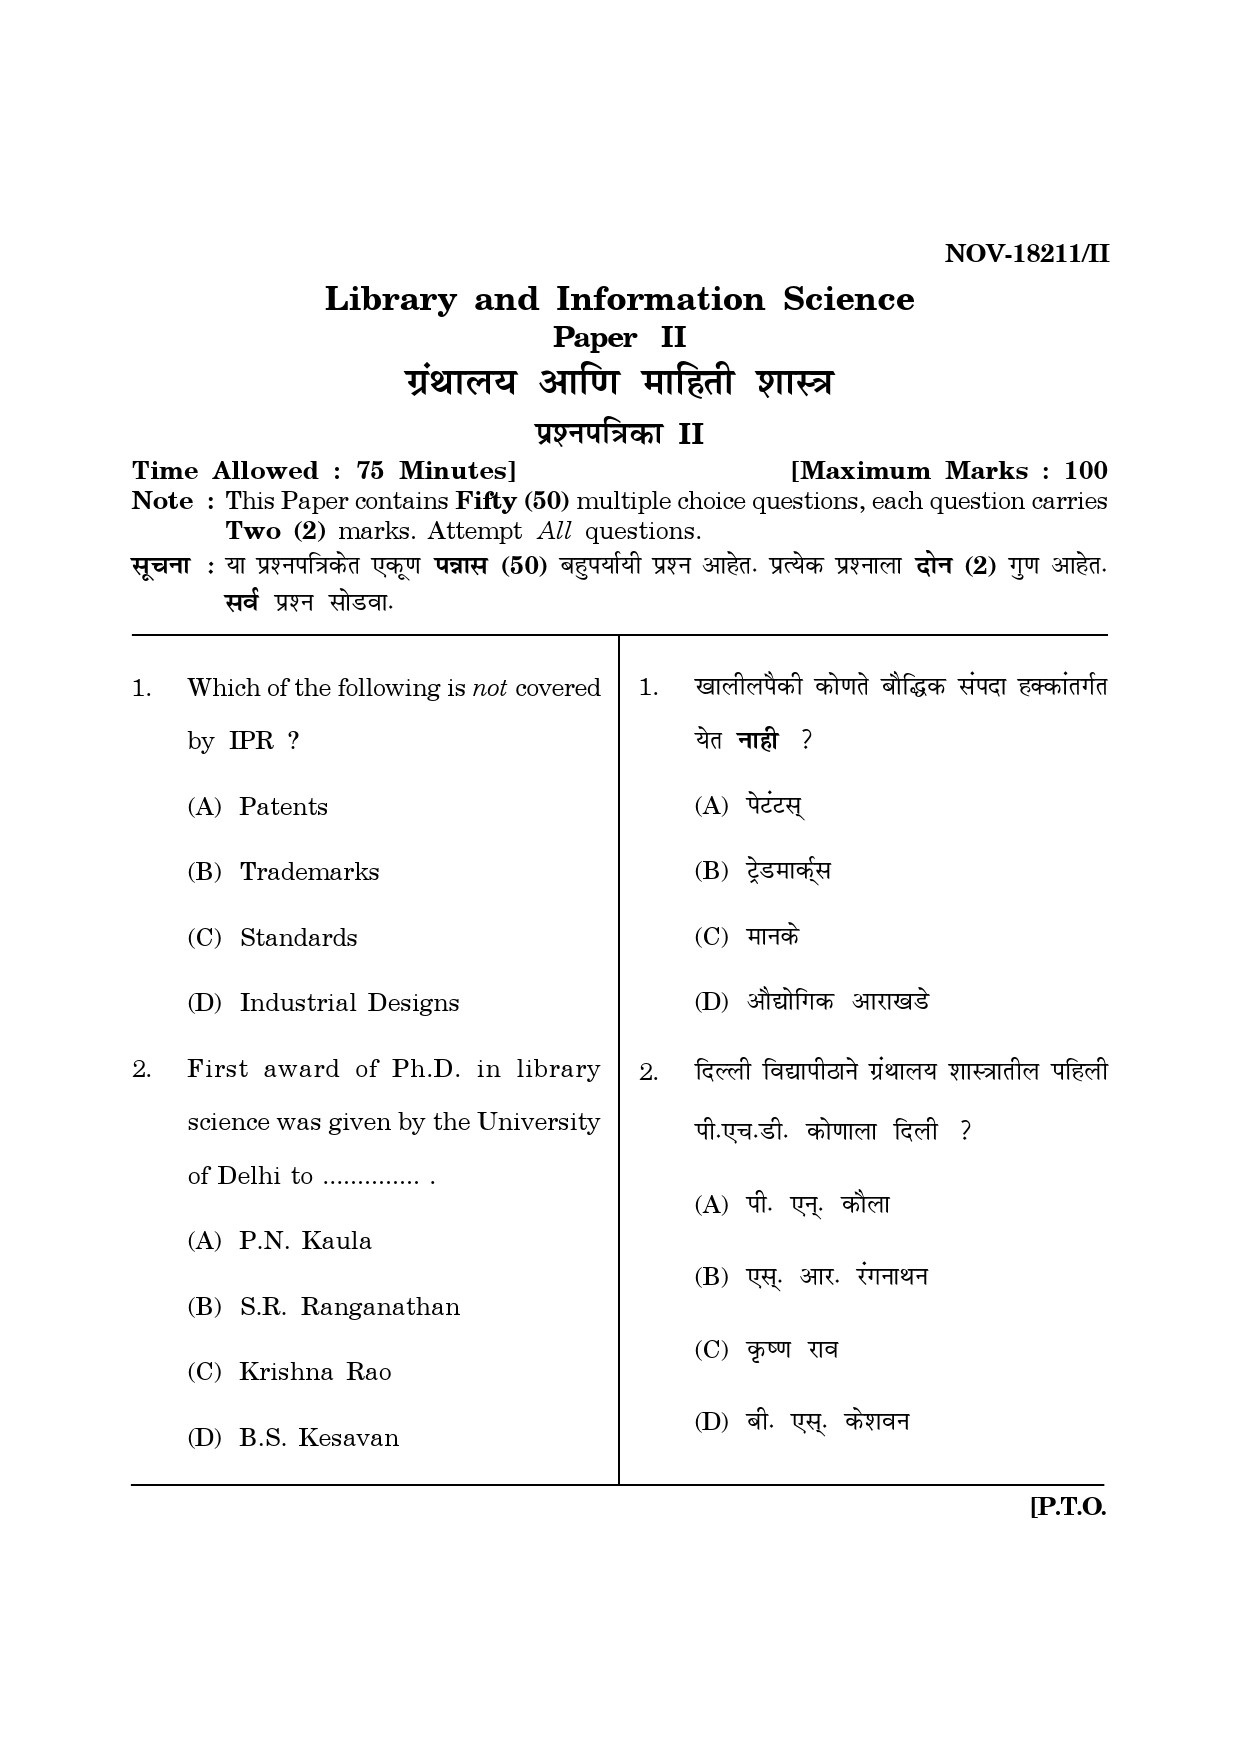 Maharashtra SET Library Information Science Question Paper II November 2011 1